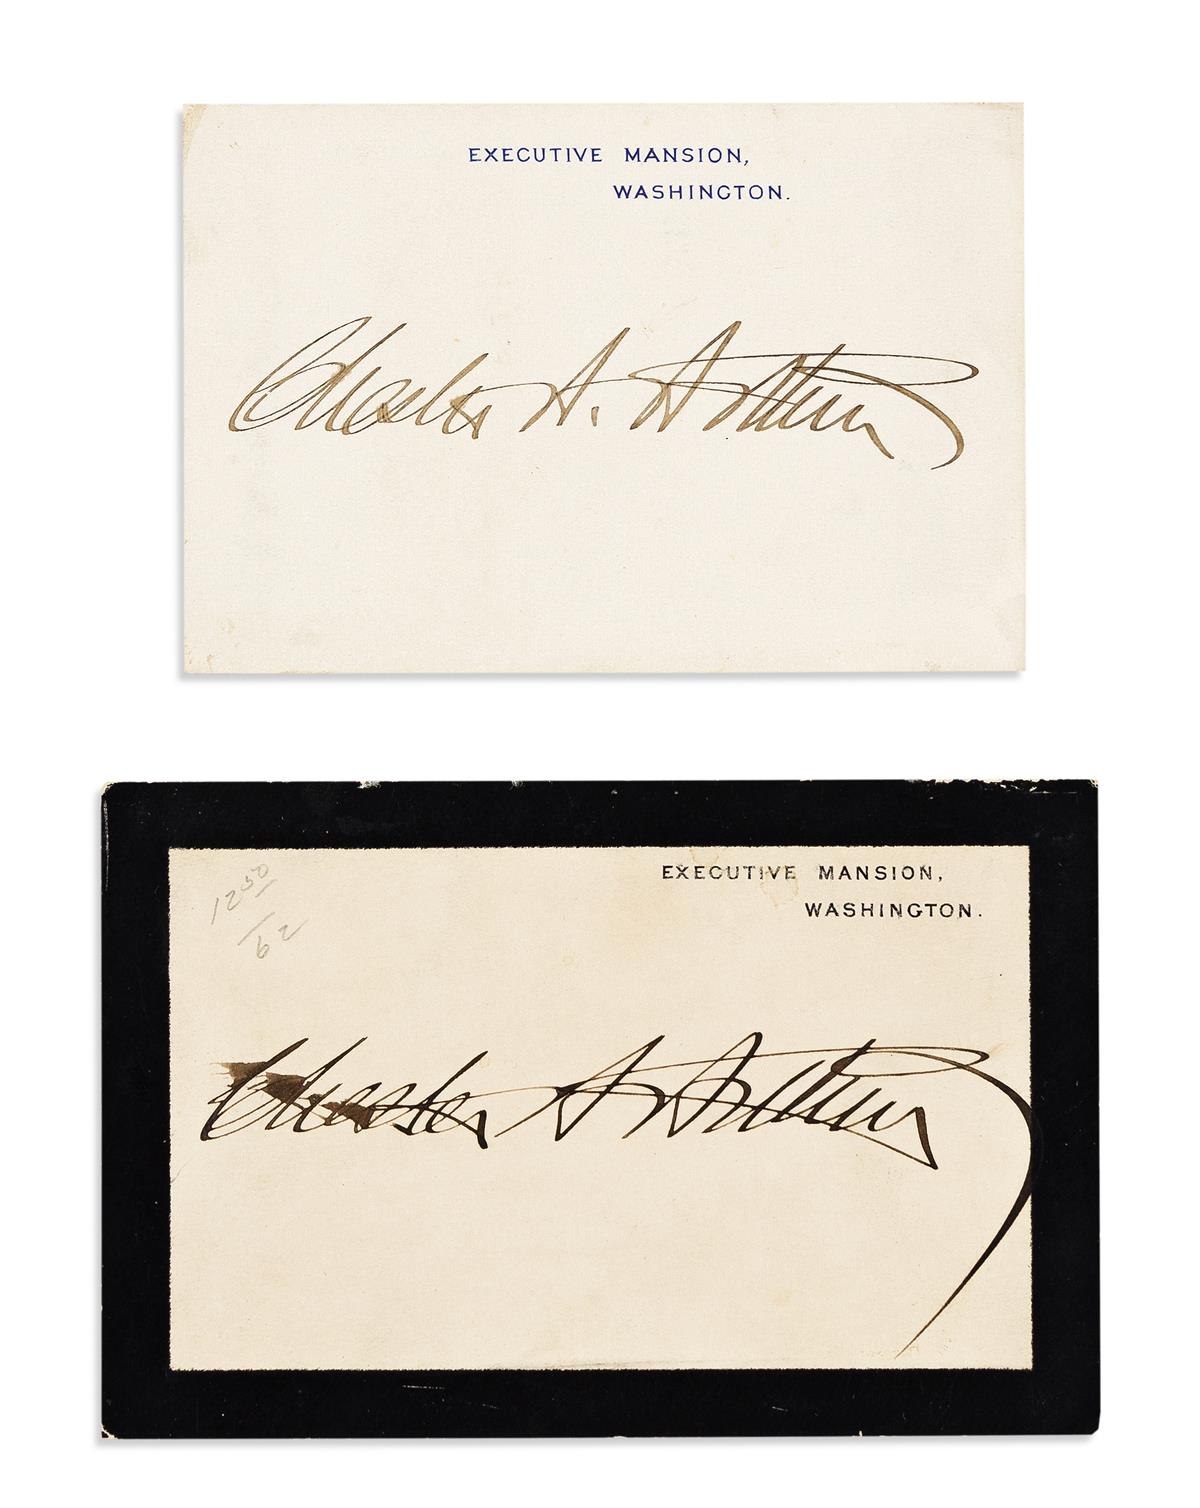 ARTHUR, CHESTER A. Two Signatures, as President, each on an Executive Mansion card.